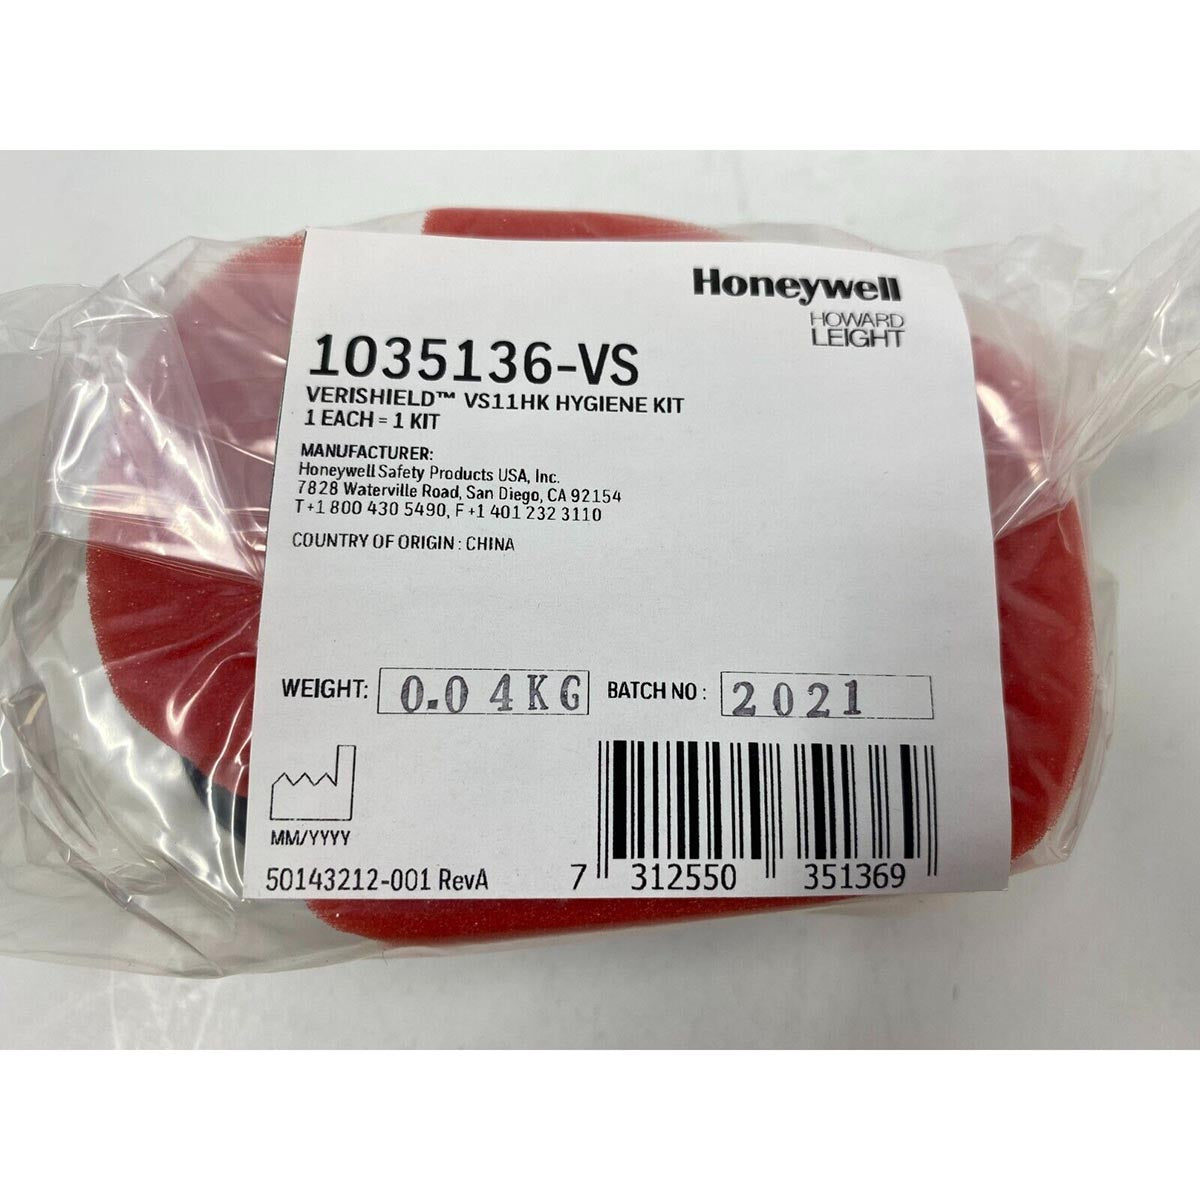 Honeywell 1035136-VS VeriShield VS11HK Hygiene Kit